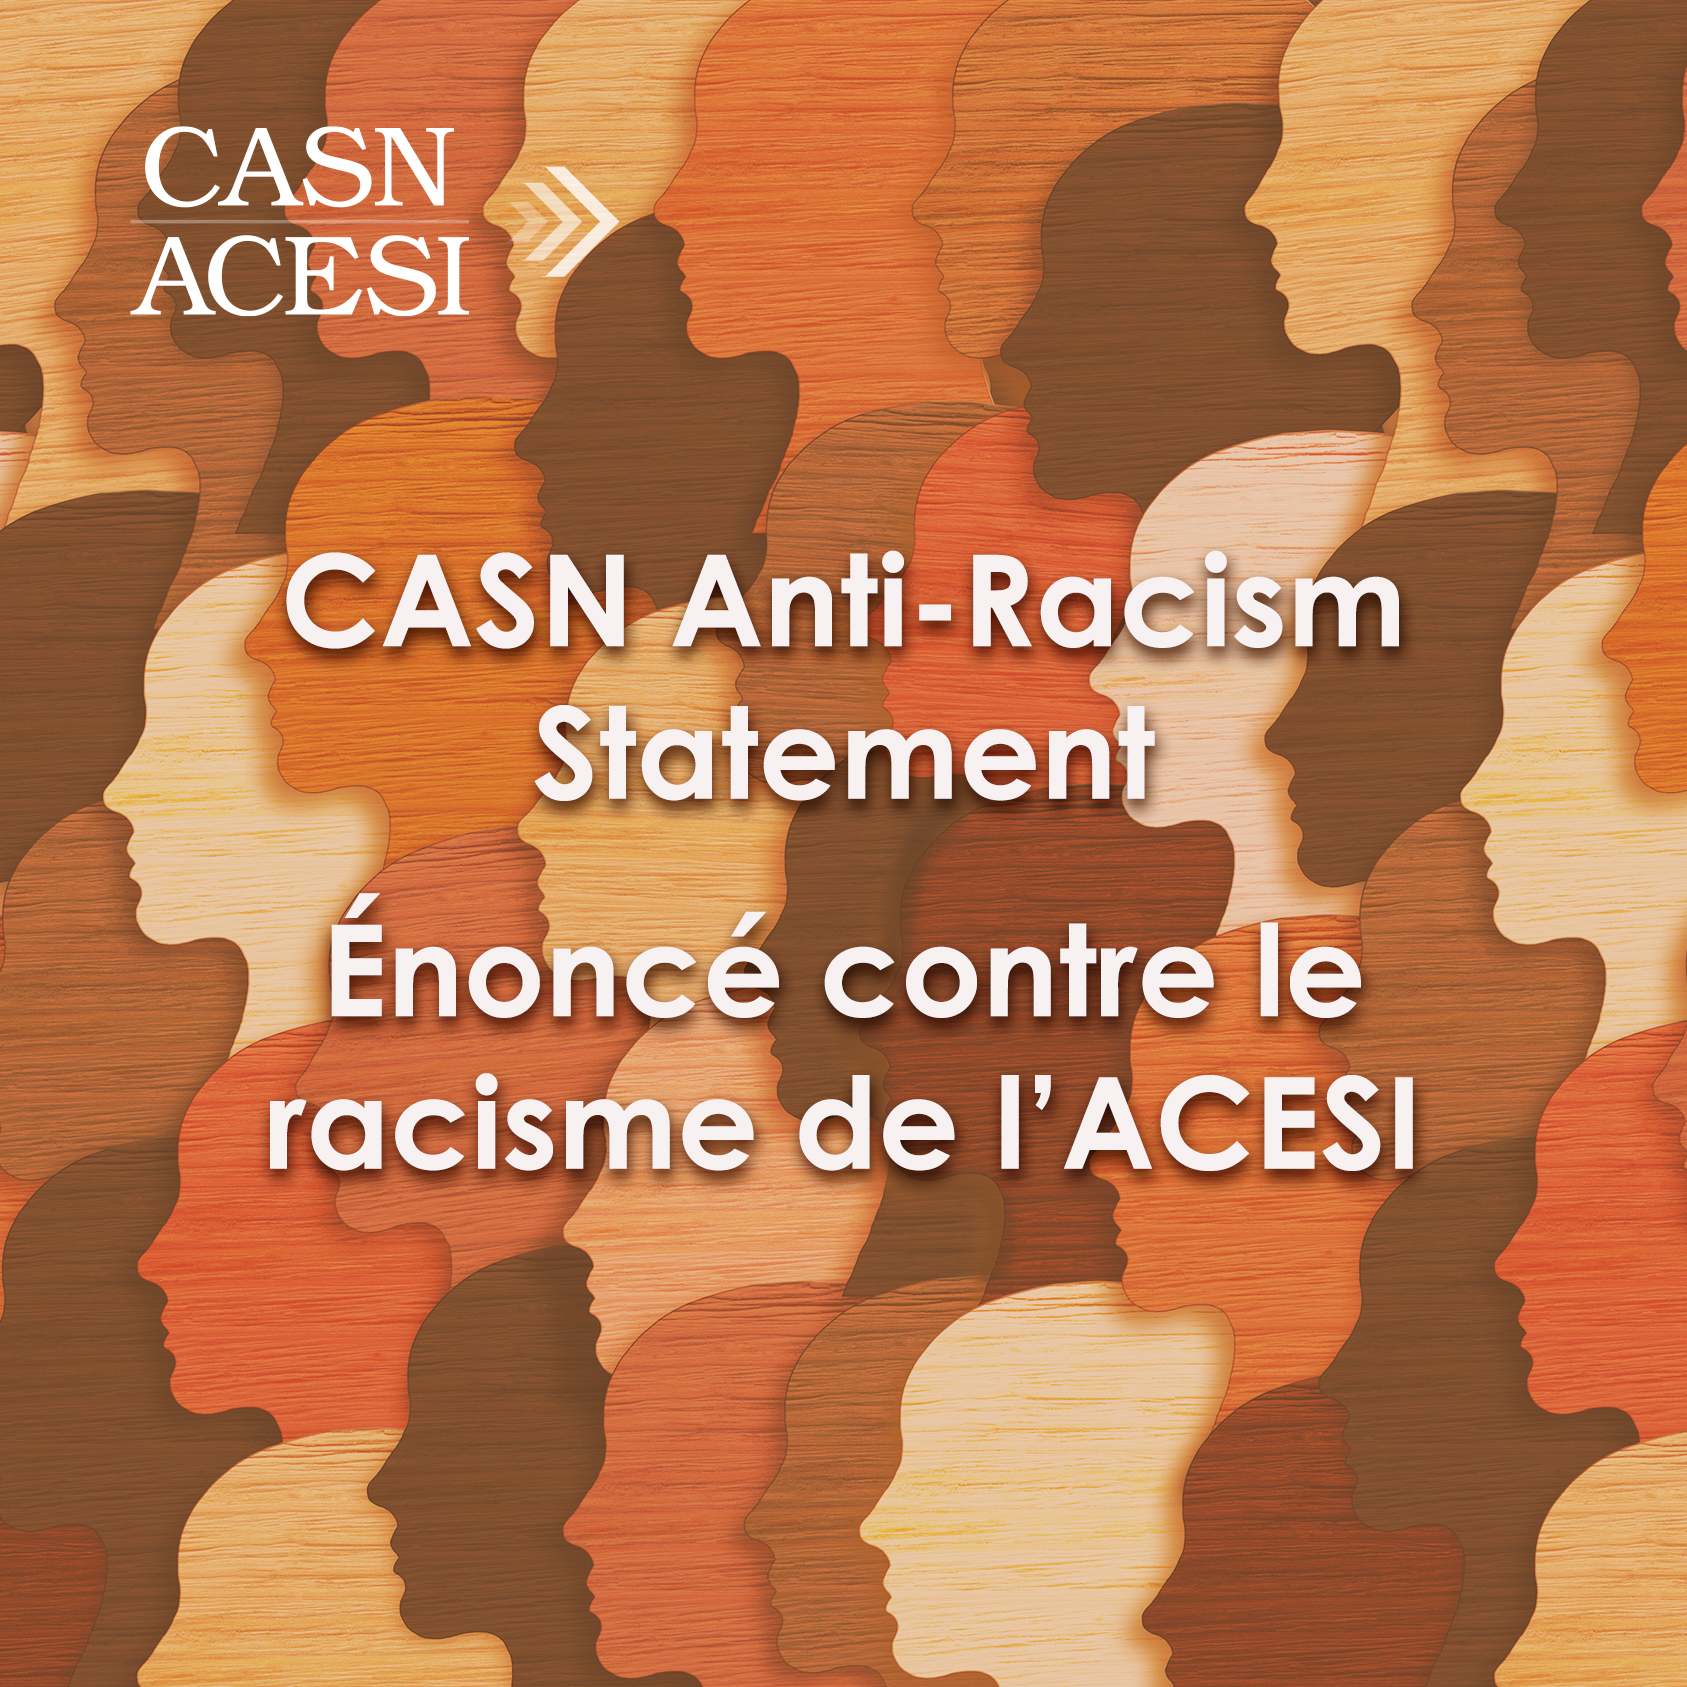 CASN Anti-Racism Statement